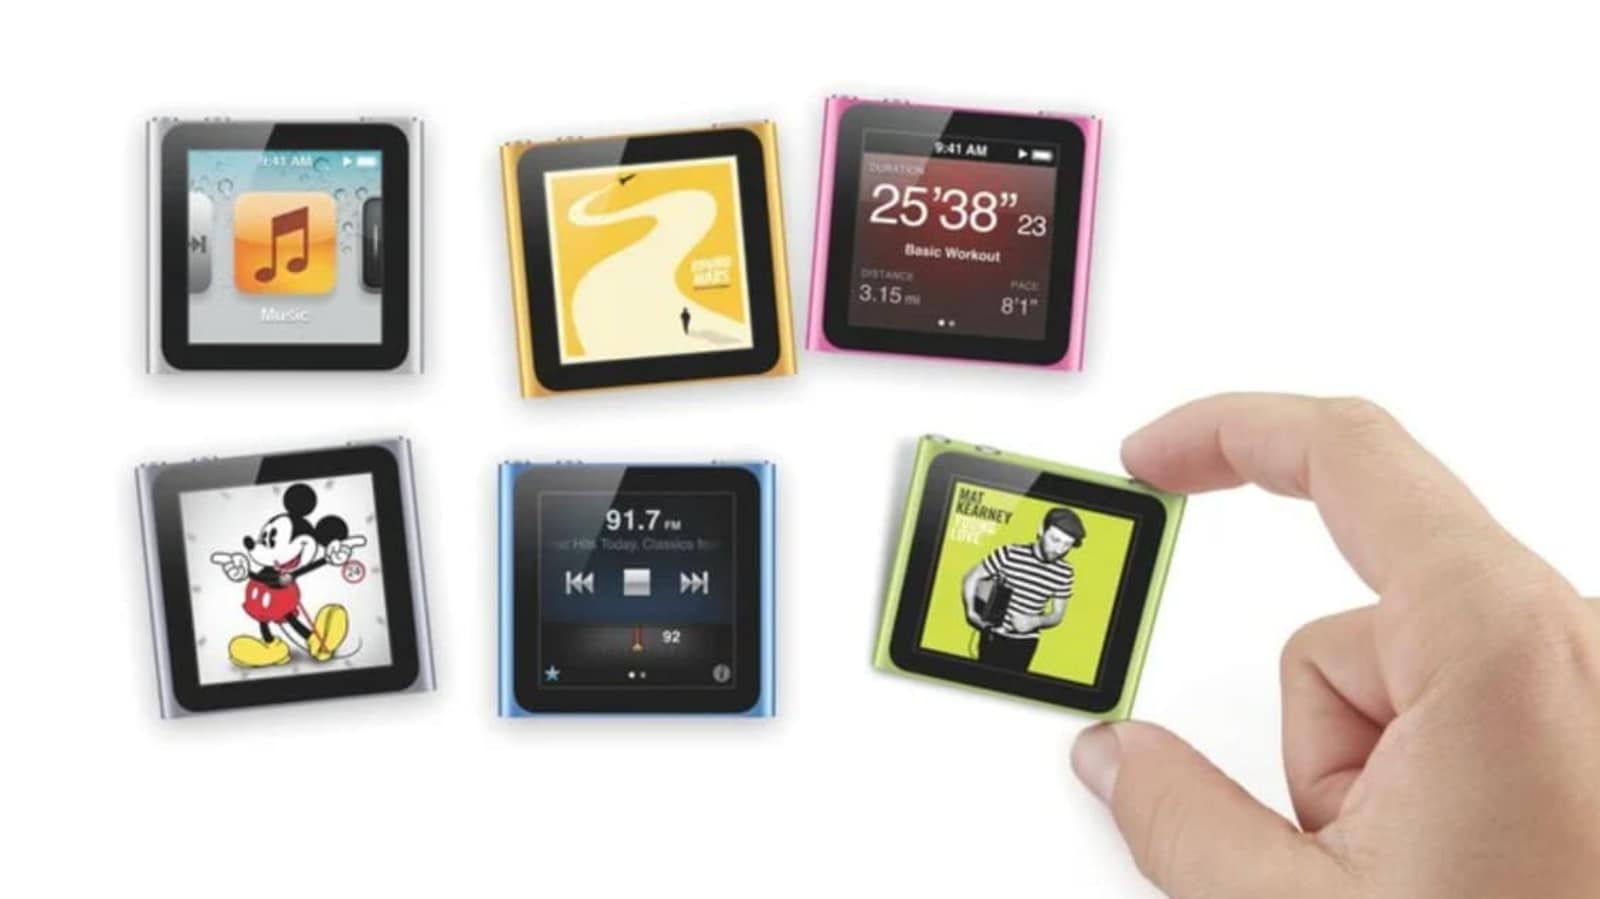 iPod nano: Apple' Mid-Range iPod, Now Discontinued